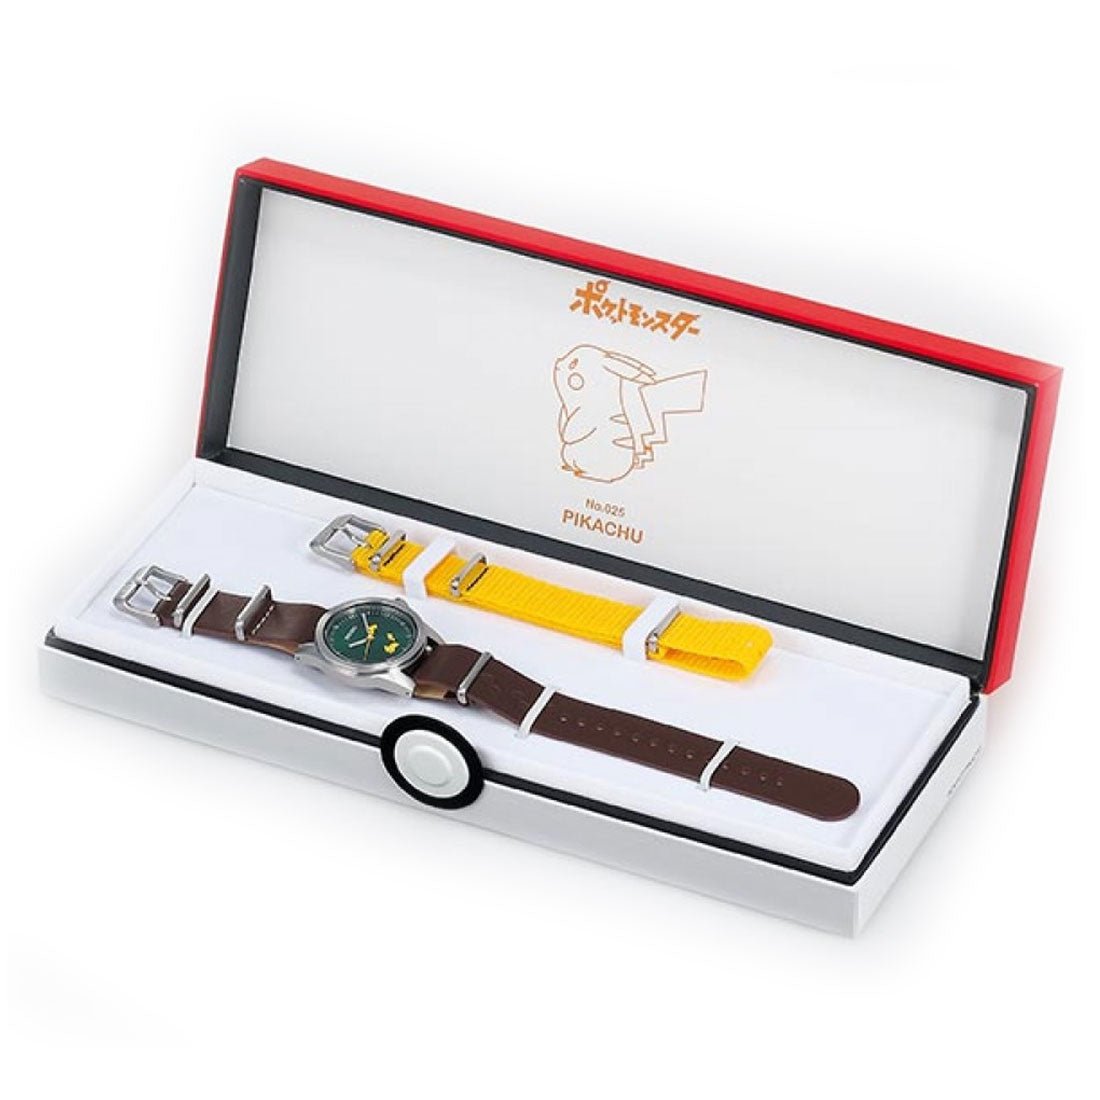 Seiko JDM SCXP177 Pikachu Pokemon Limited Edition Leather Watch -Seiko